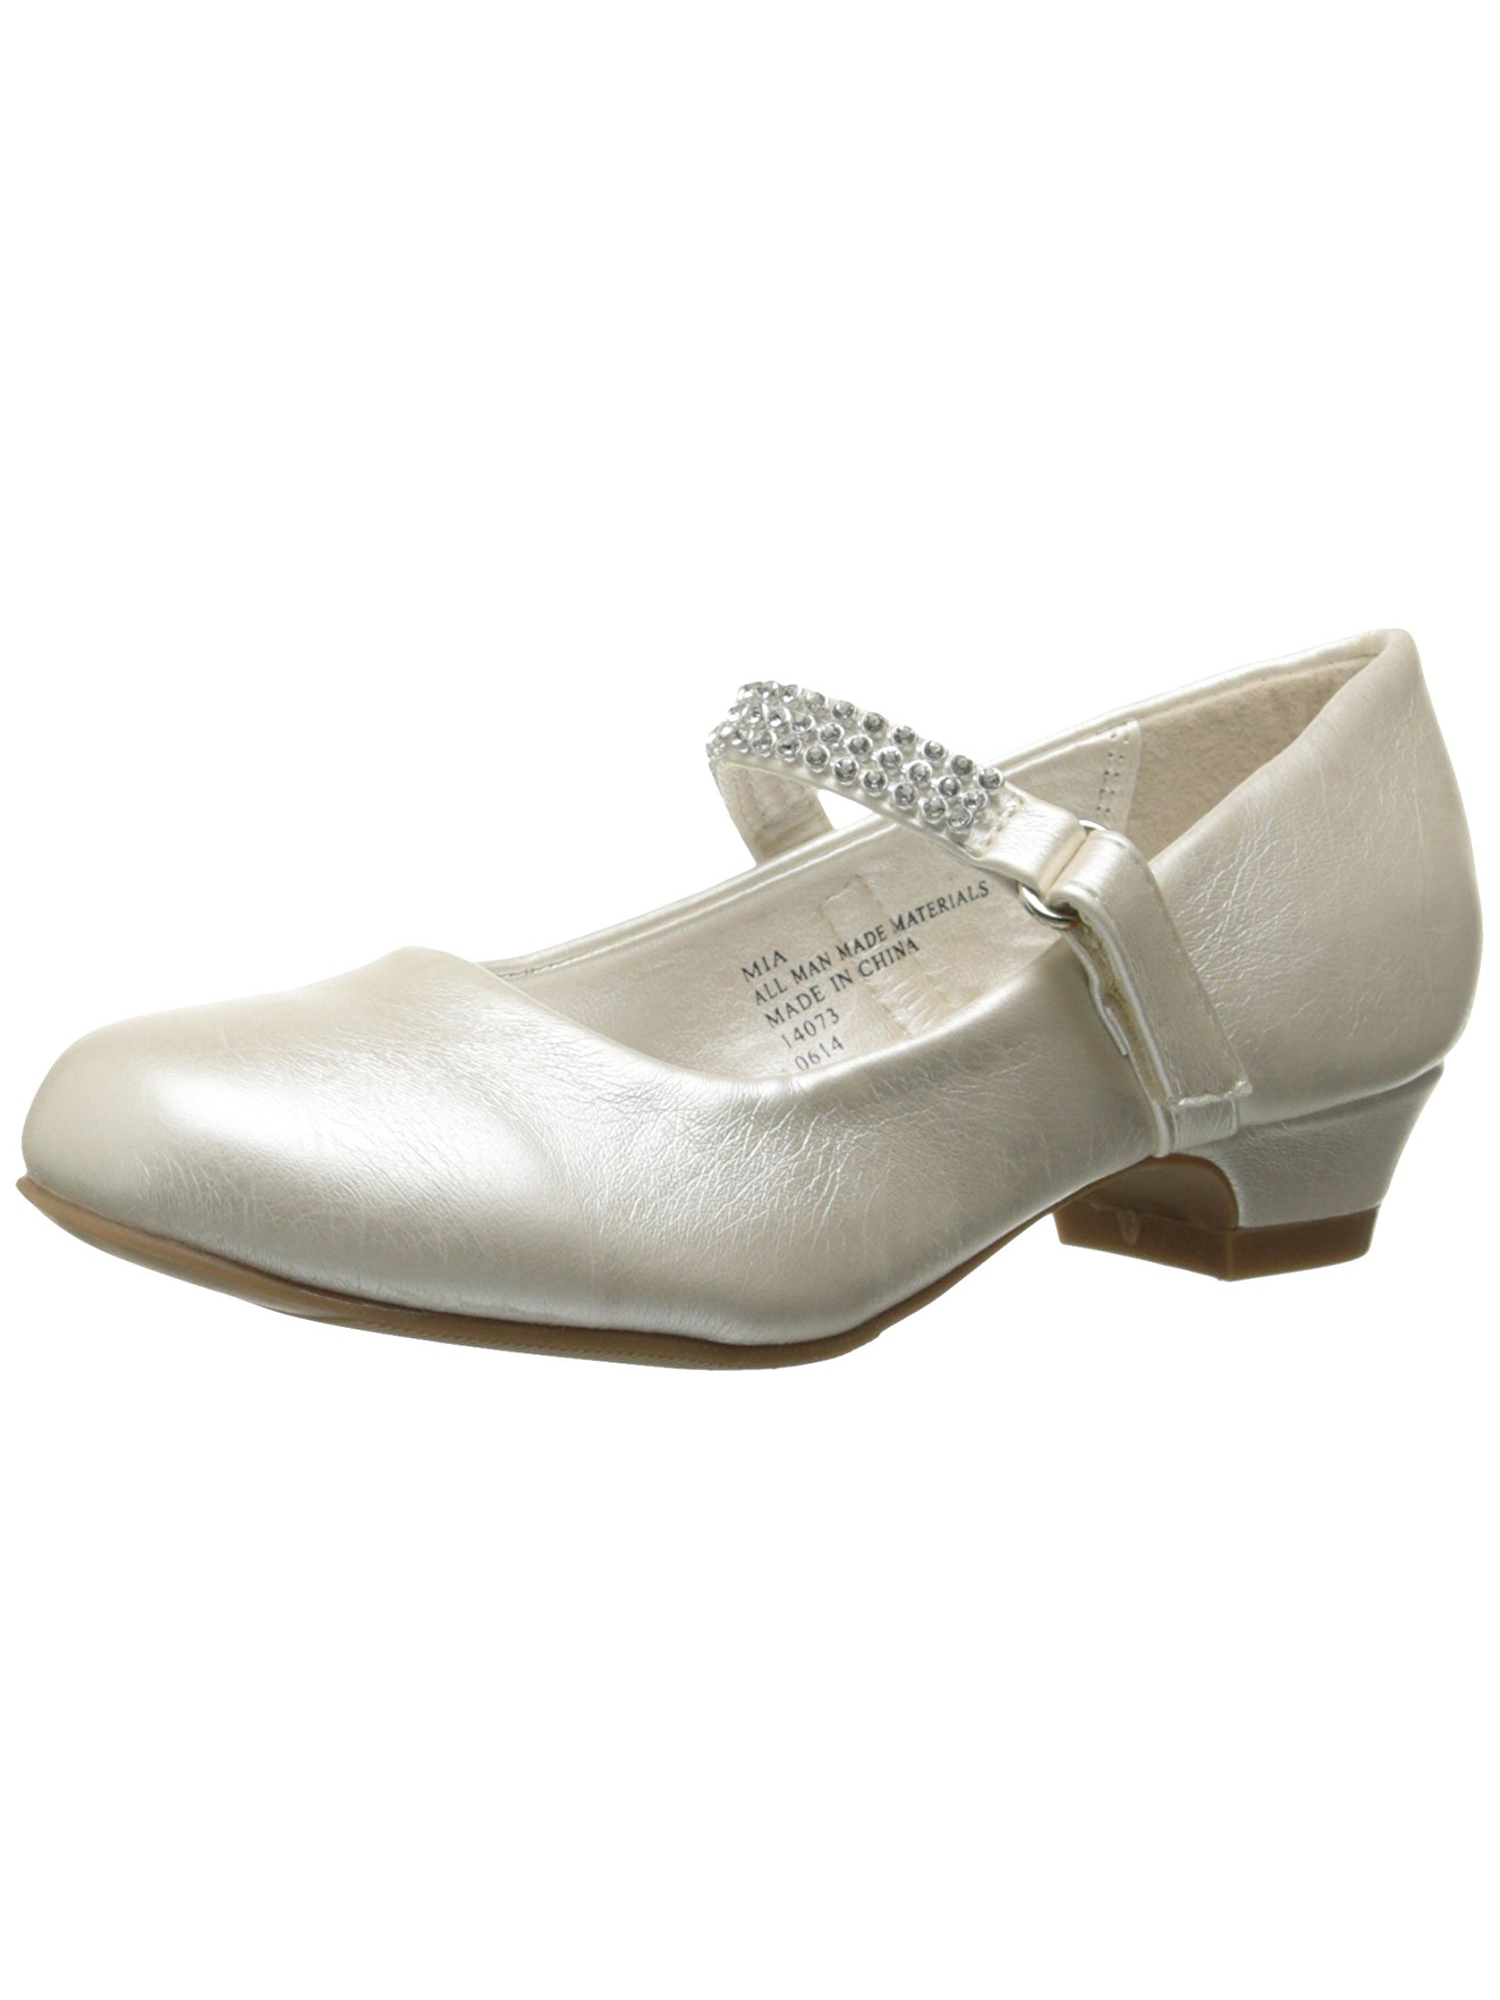 Girls Low Heel Dress Shoe With Rhinestone Strap (3, White)